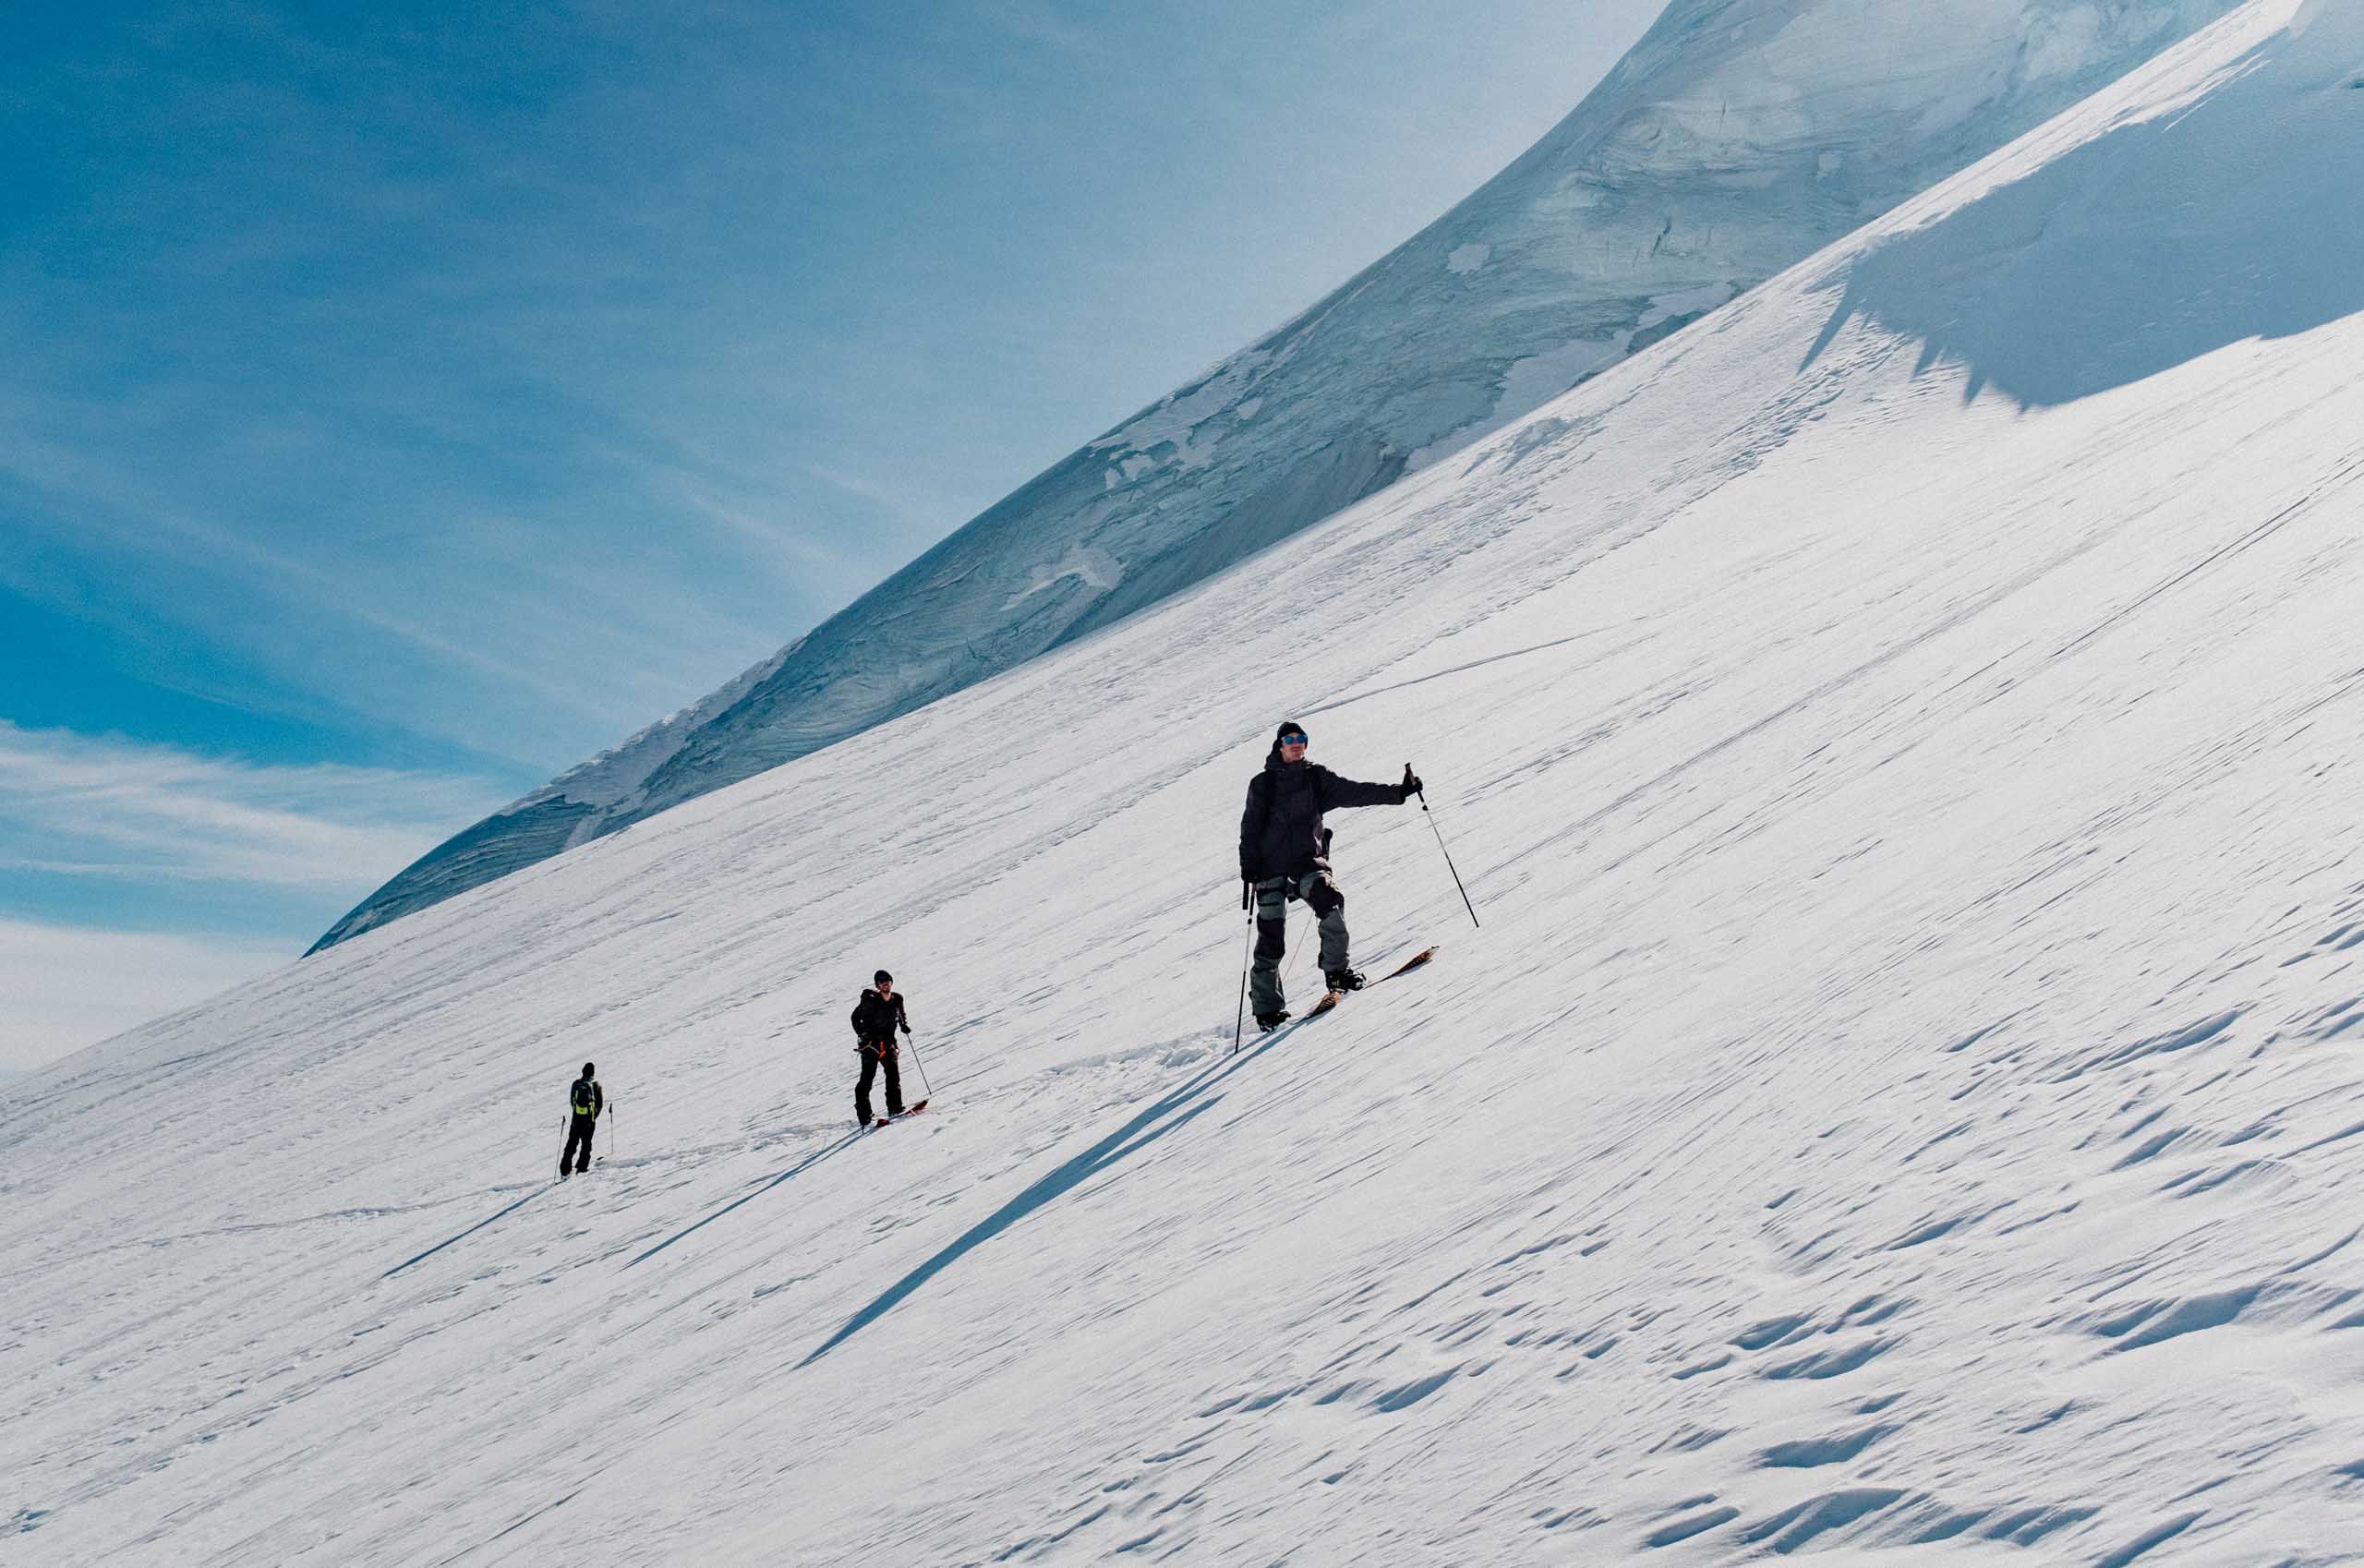 Snowboarding in Switzerland | Fredi Kalbermatten Shreds and Climbs His Home Switzerland